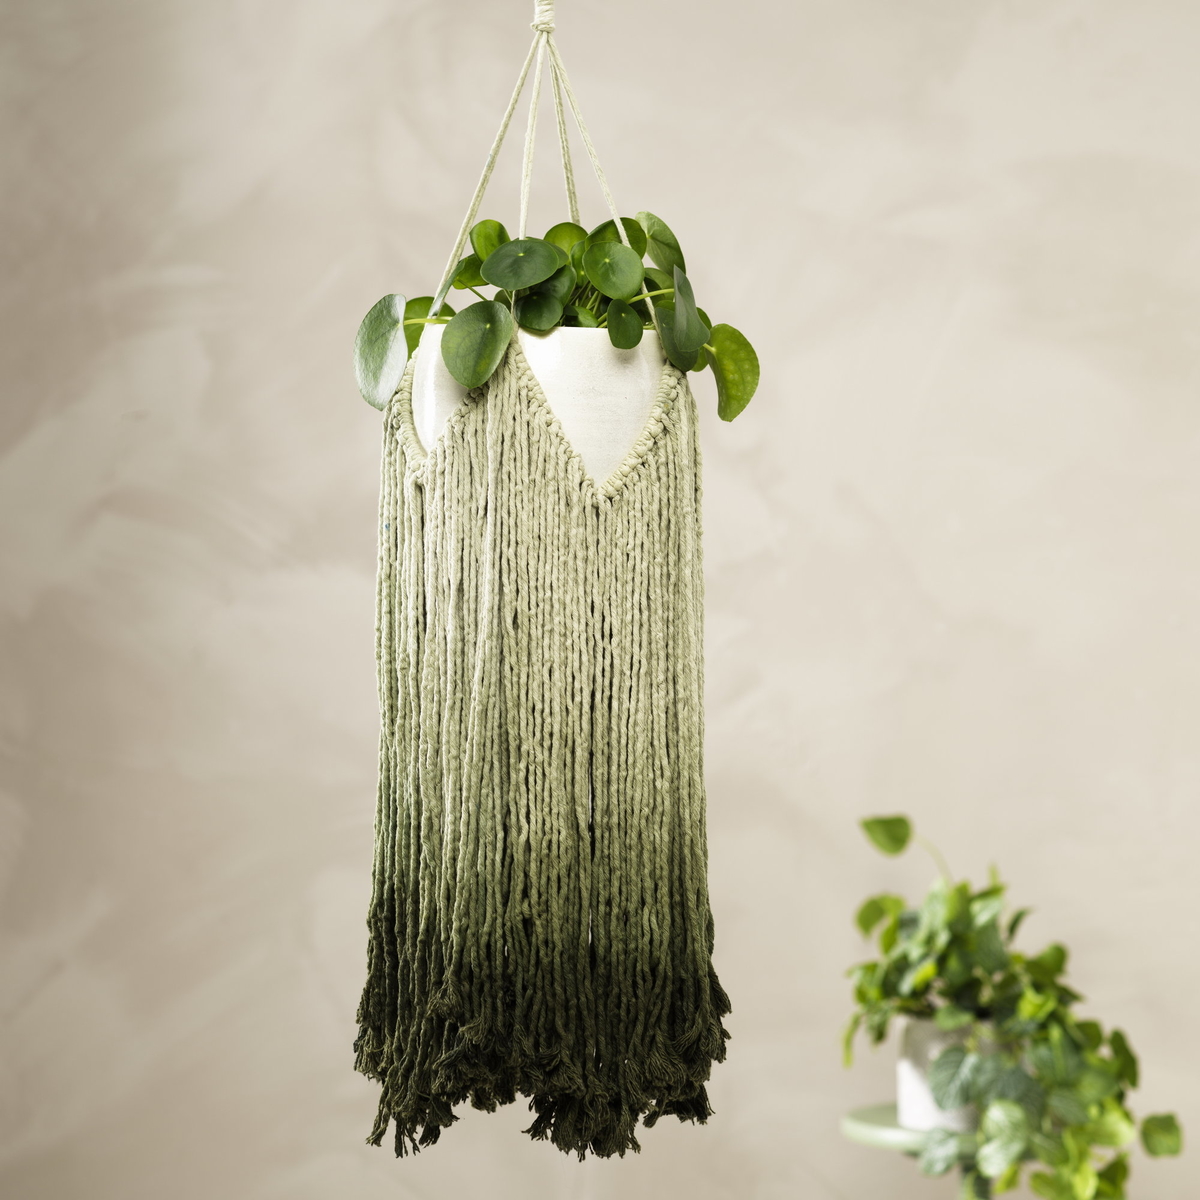 Make a dip-dye hanging plant holder